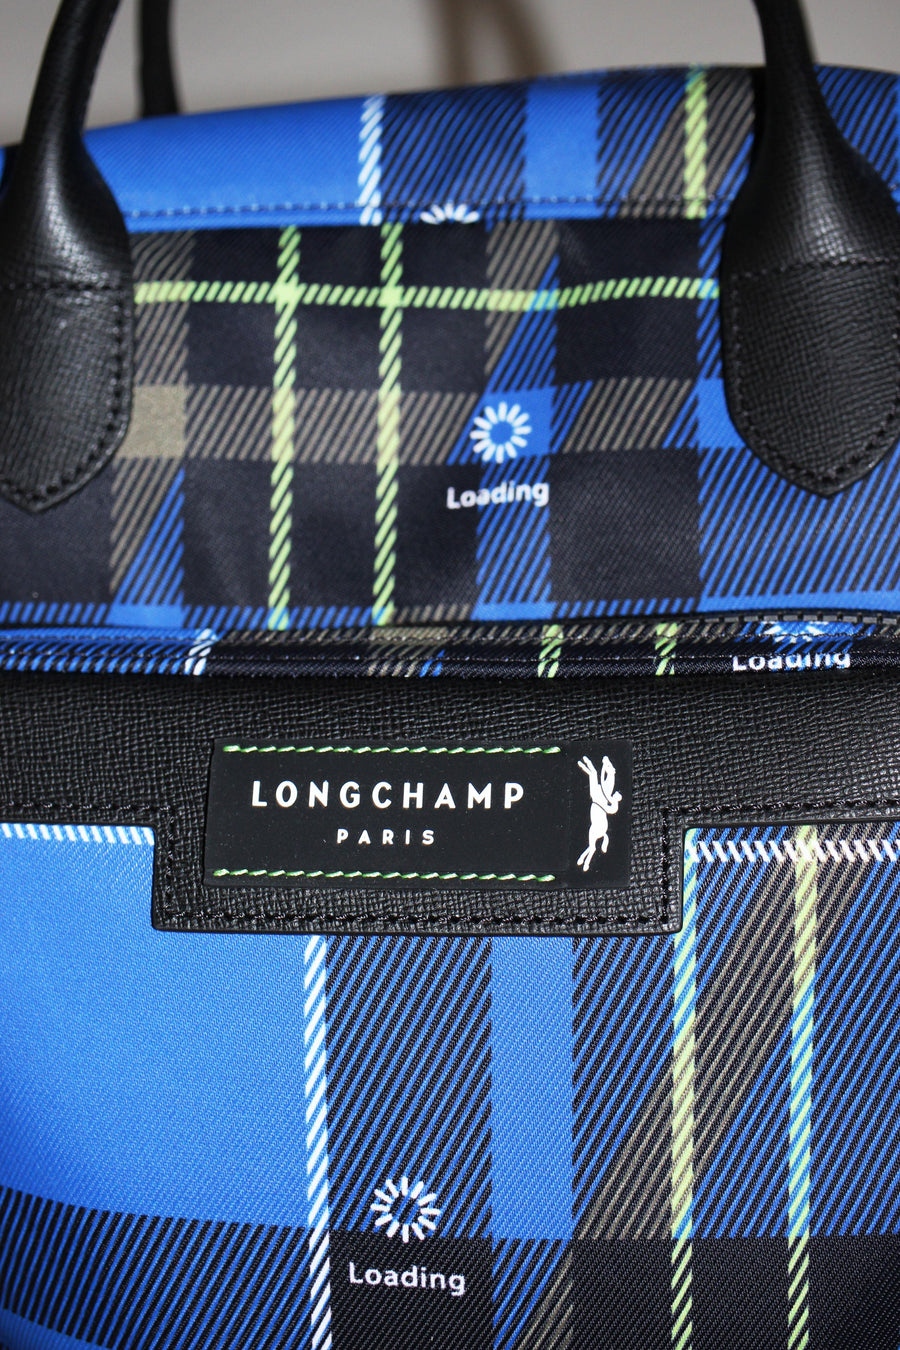 Longchamp Backpack - The Good Store Berlin